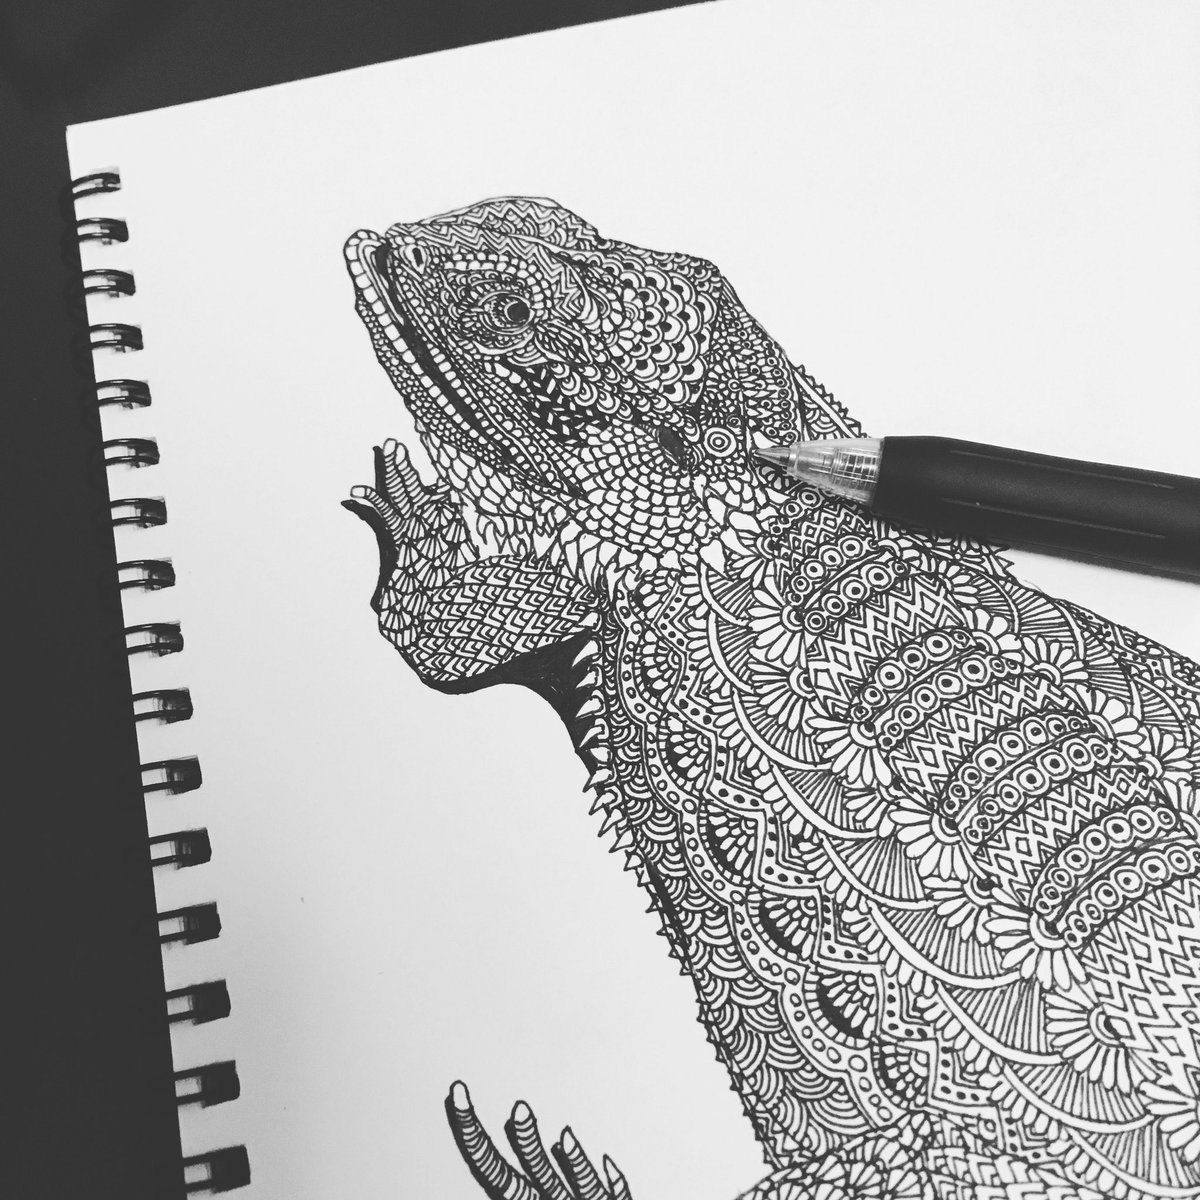 Saki ボールペン画アーティスト フトアゴヒゲトカゲさん練習 フトアゴヒゲトカゲ 爬虫類 ペン画 ペン画を流して ペン画民を増やそう Illustration Art Reptile